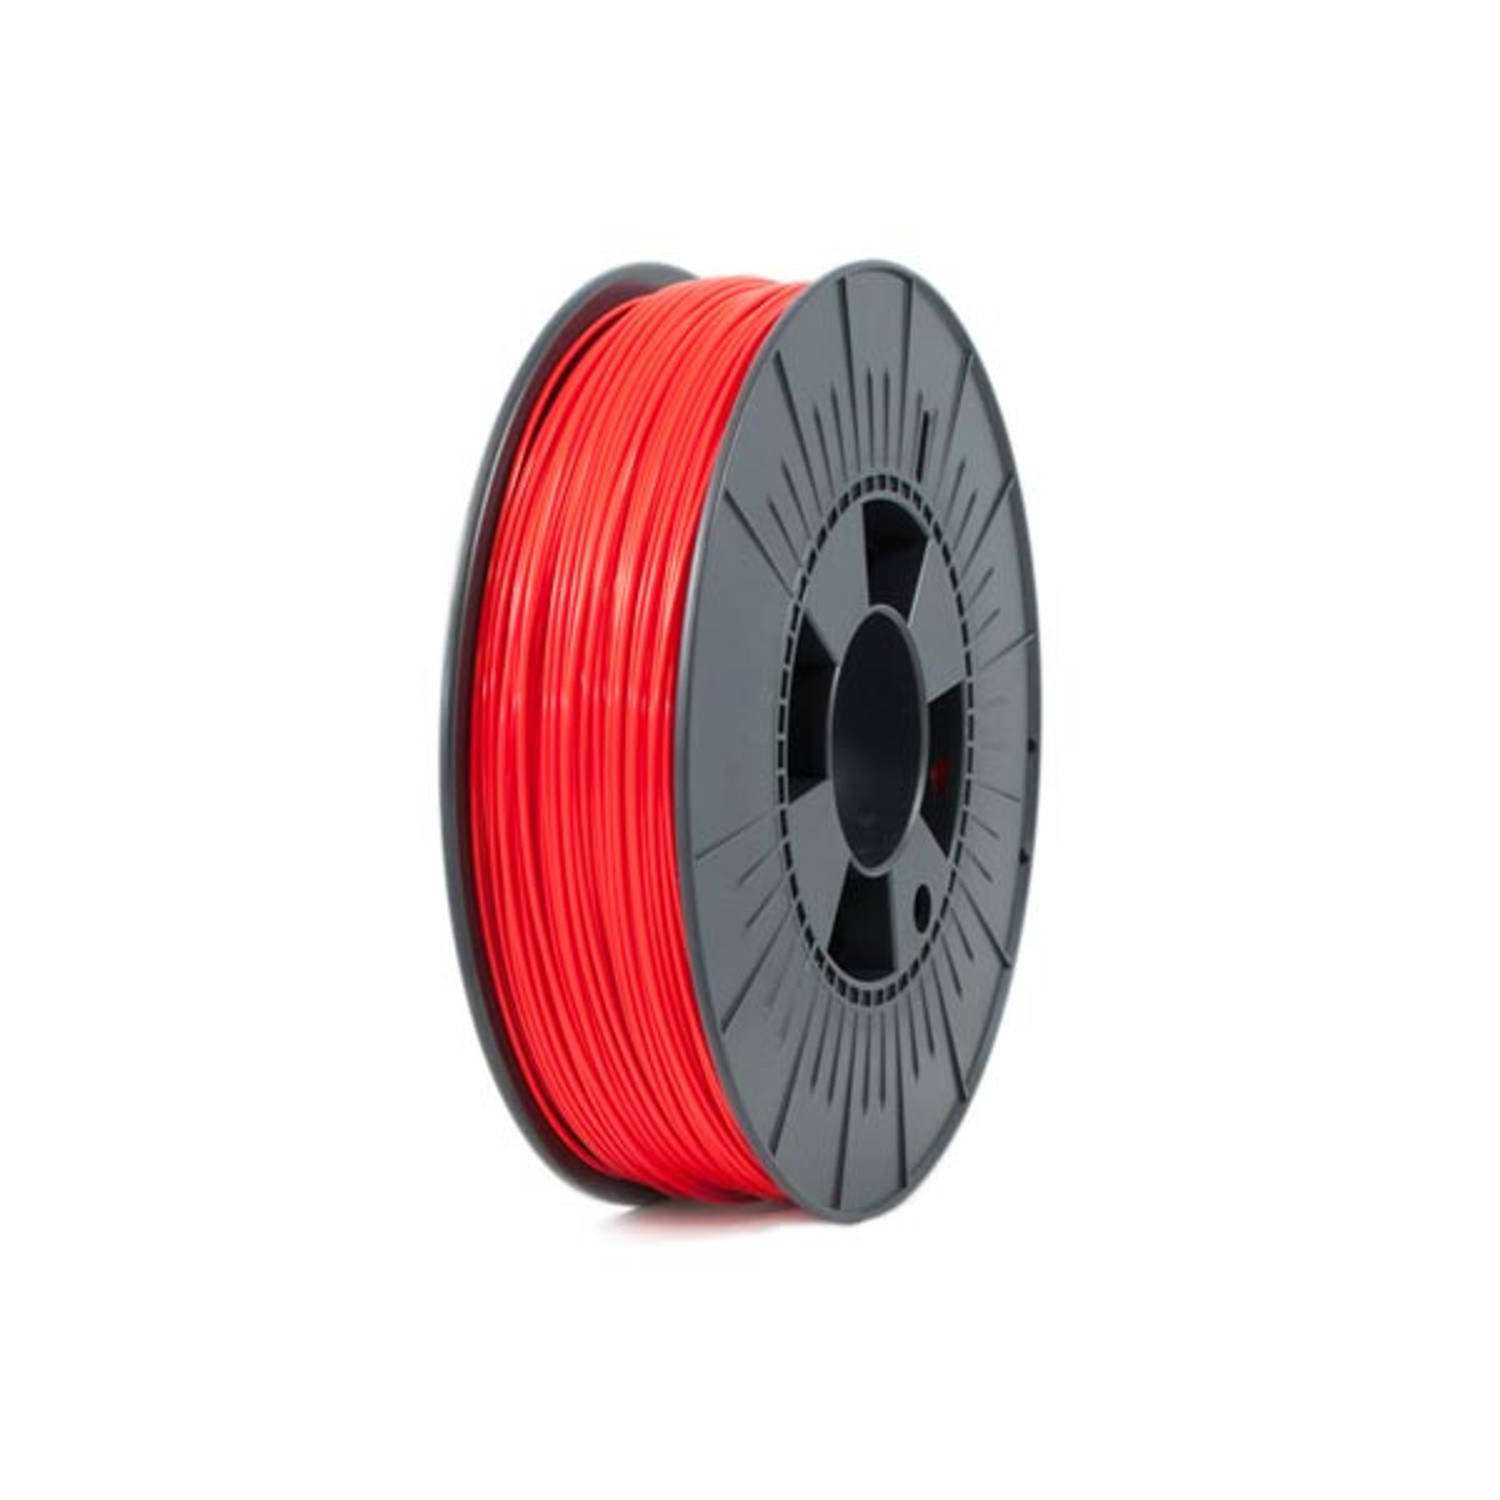 Whadda Though PLA Filament - Rood - 1.75 mm - 750 g - Industriële Kwaliteit